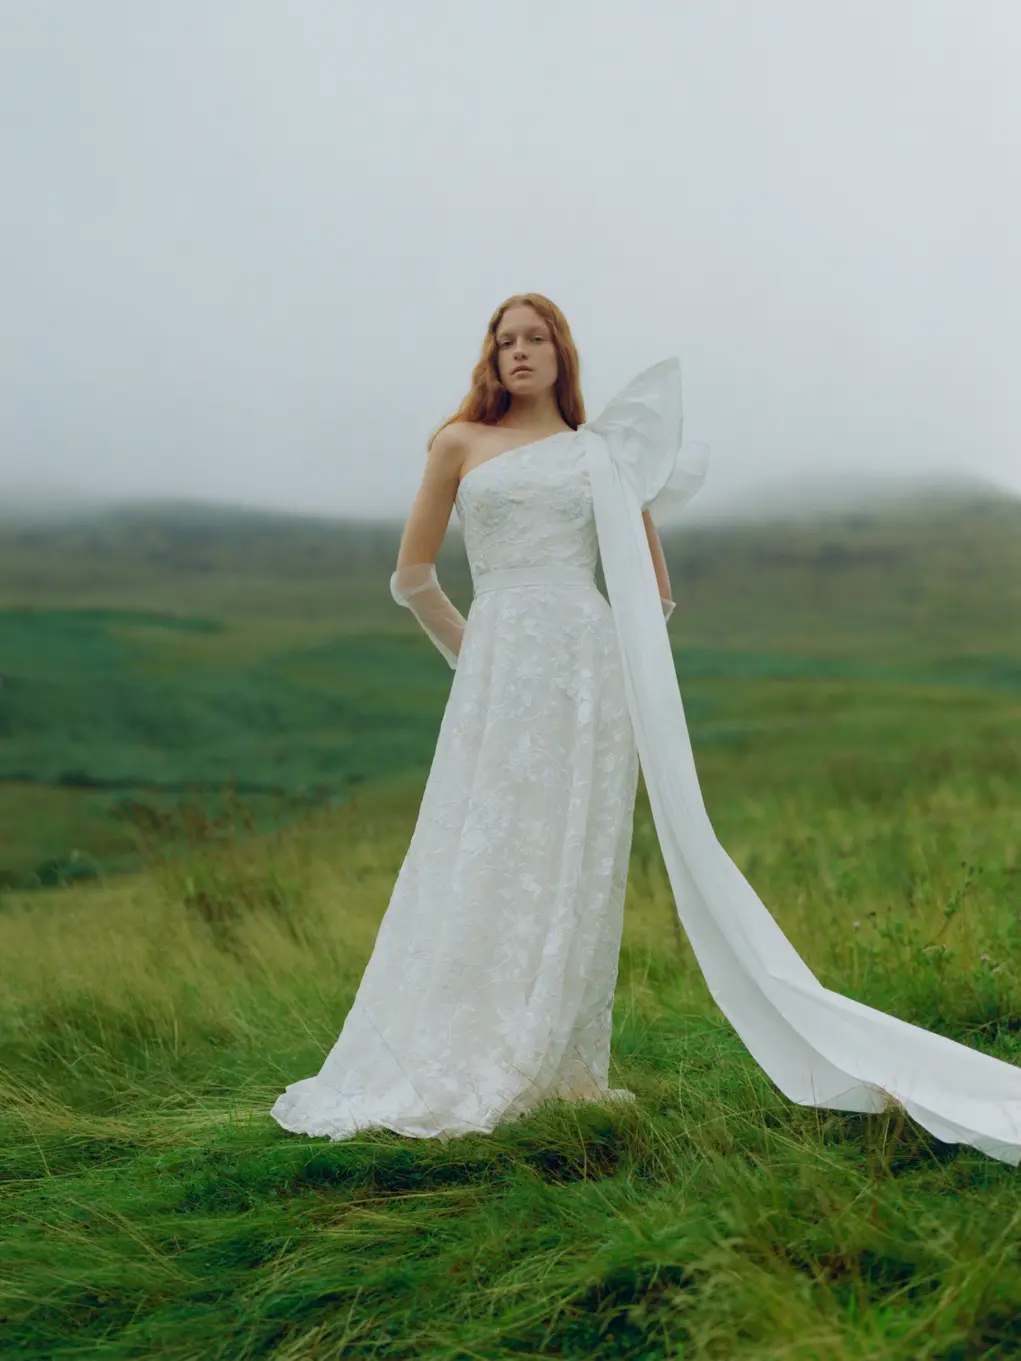 A woman wearing a white wedding dress in a grassy field